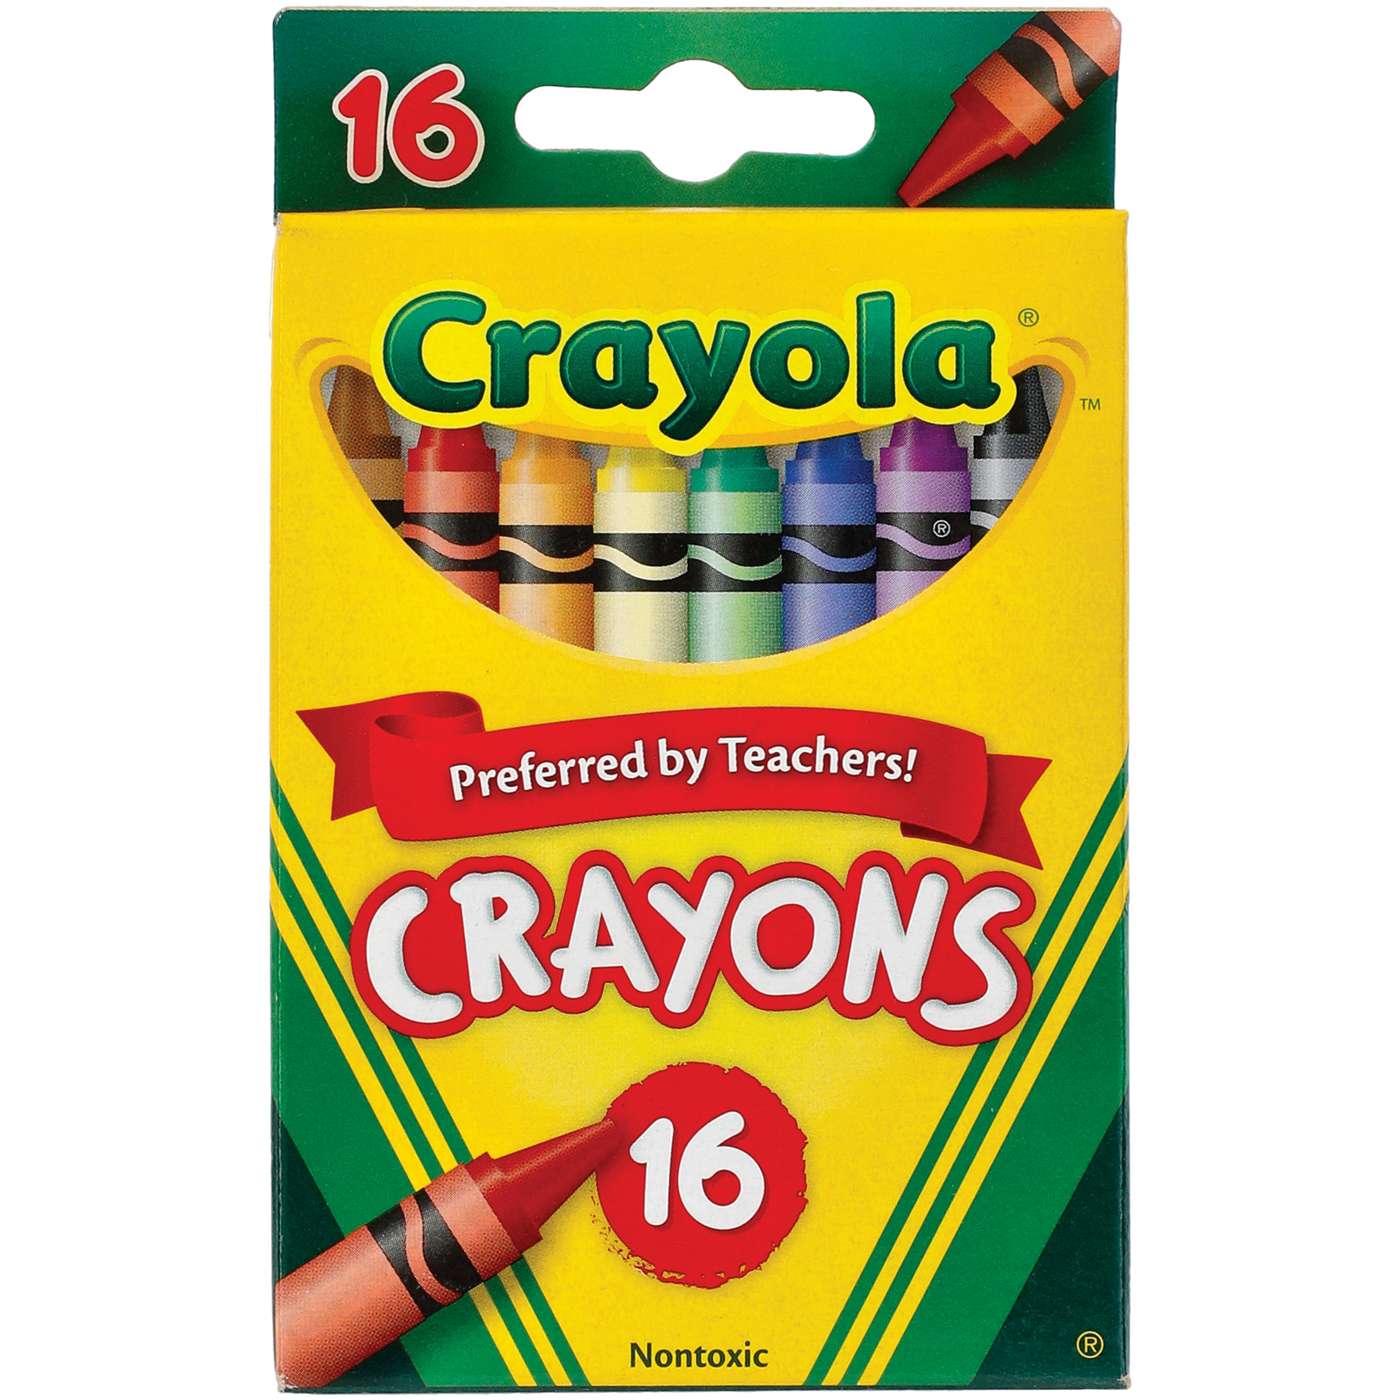 Kids Crayons 2 Pack